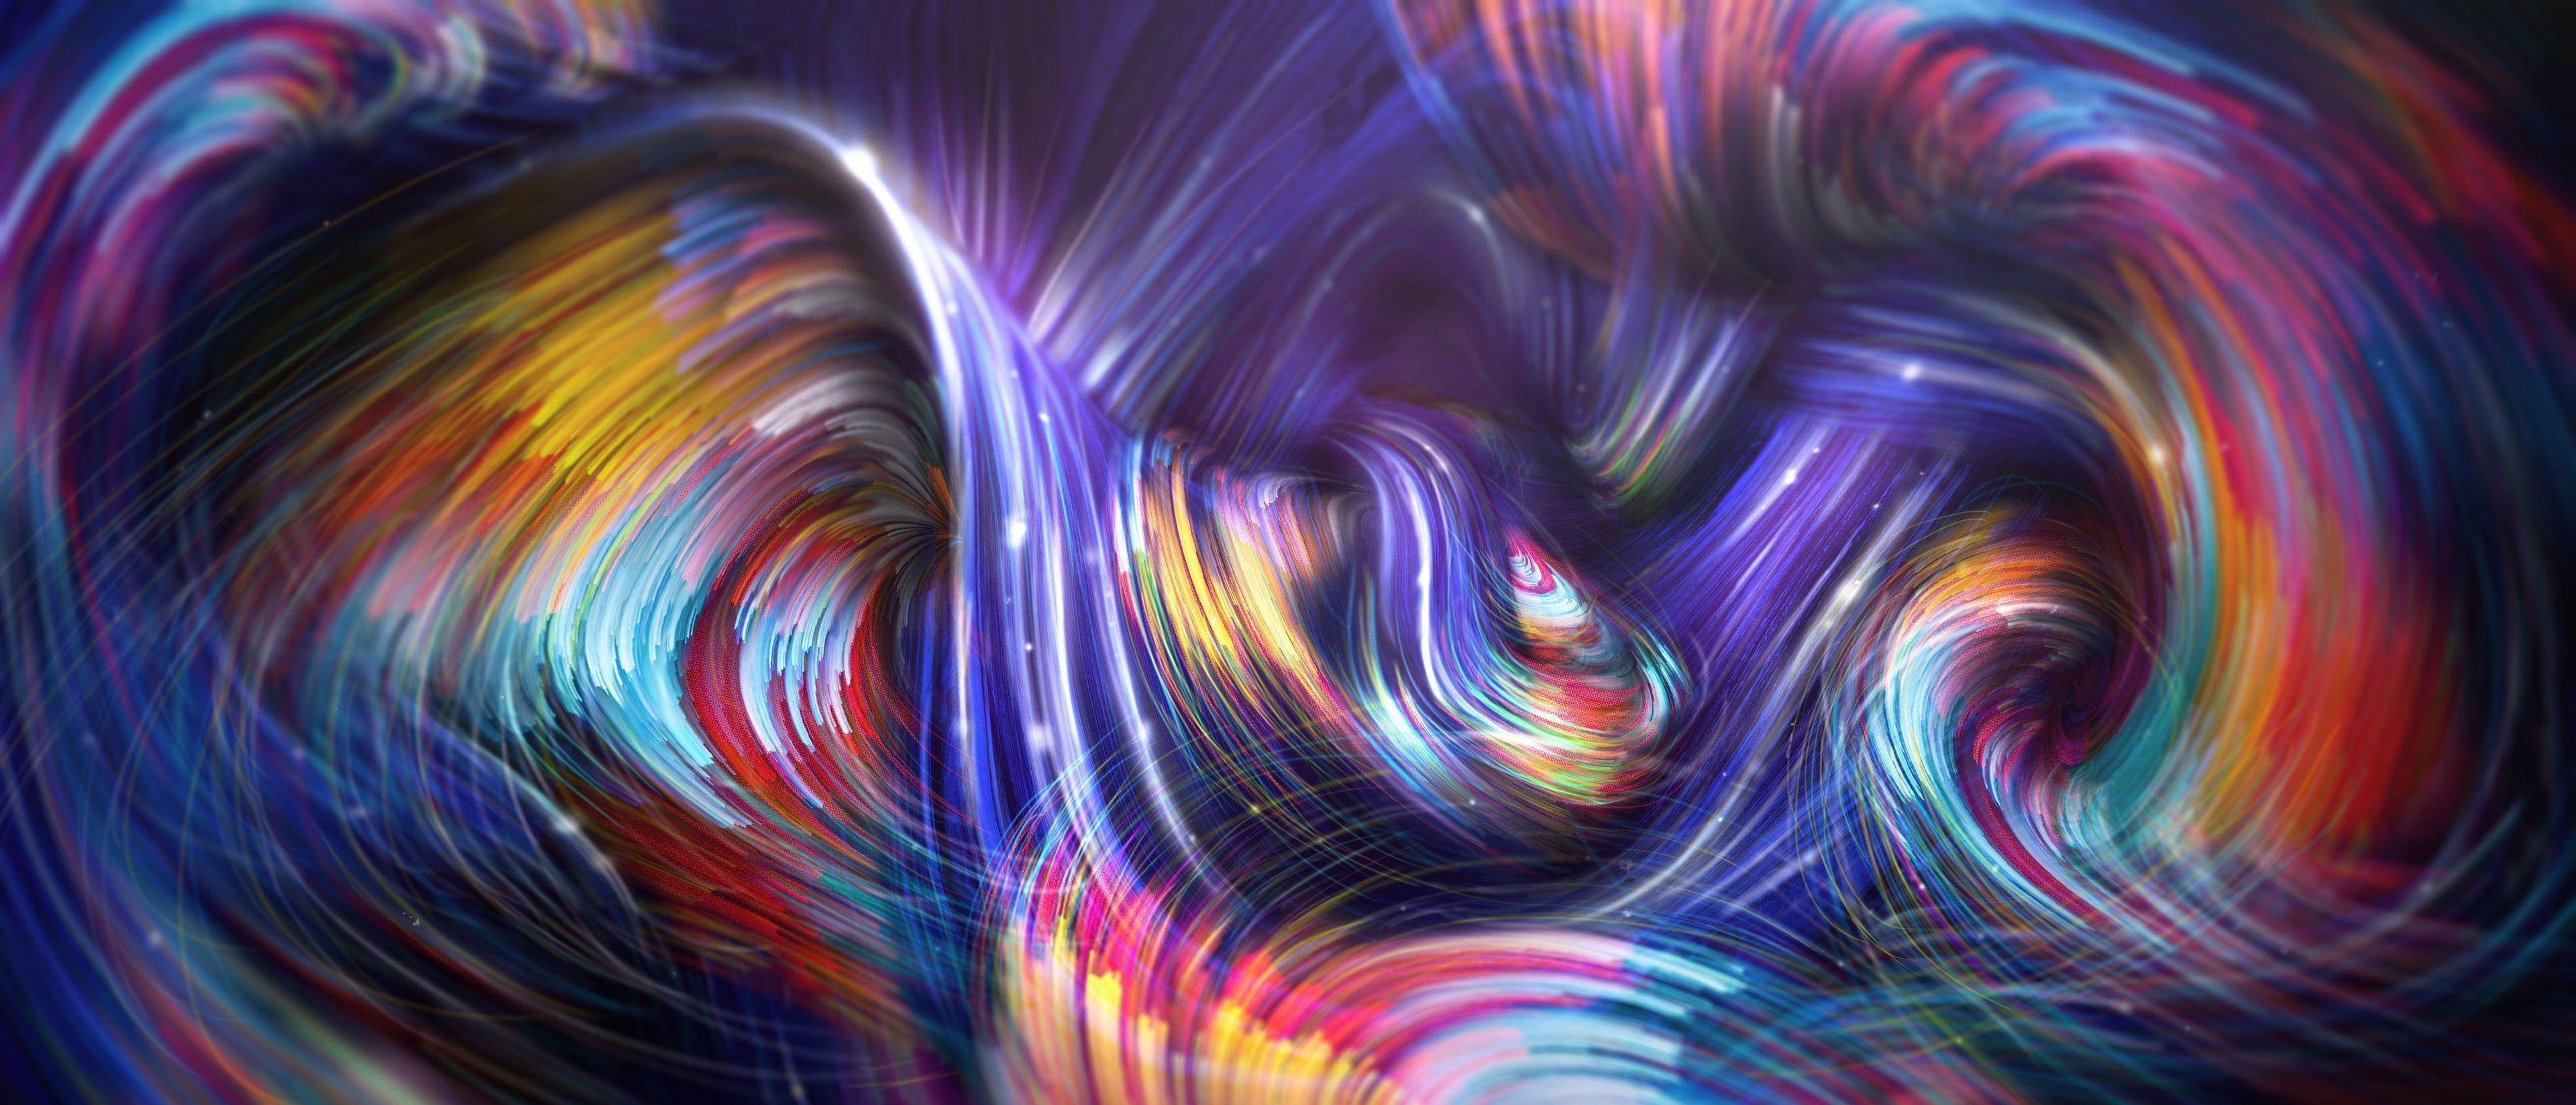 Waves Forces Colorful Photoshop Paint 4k